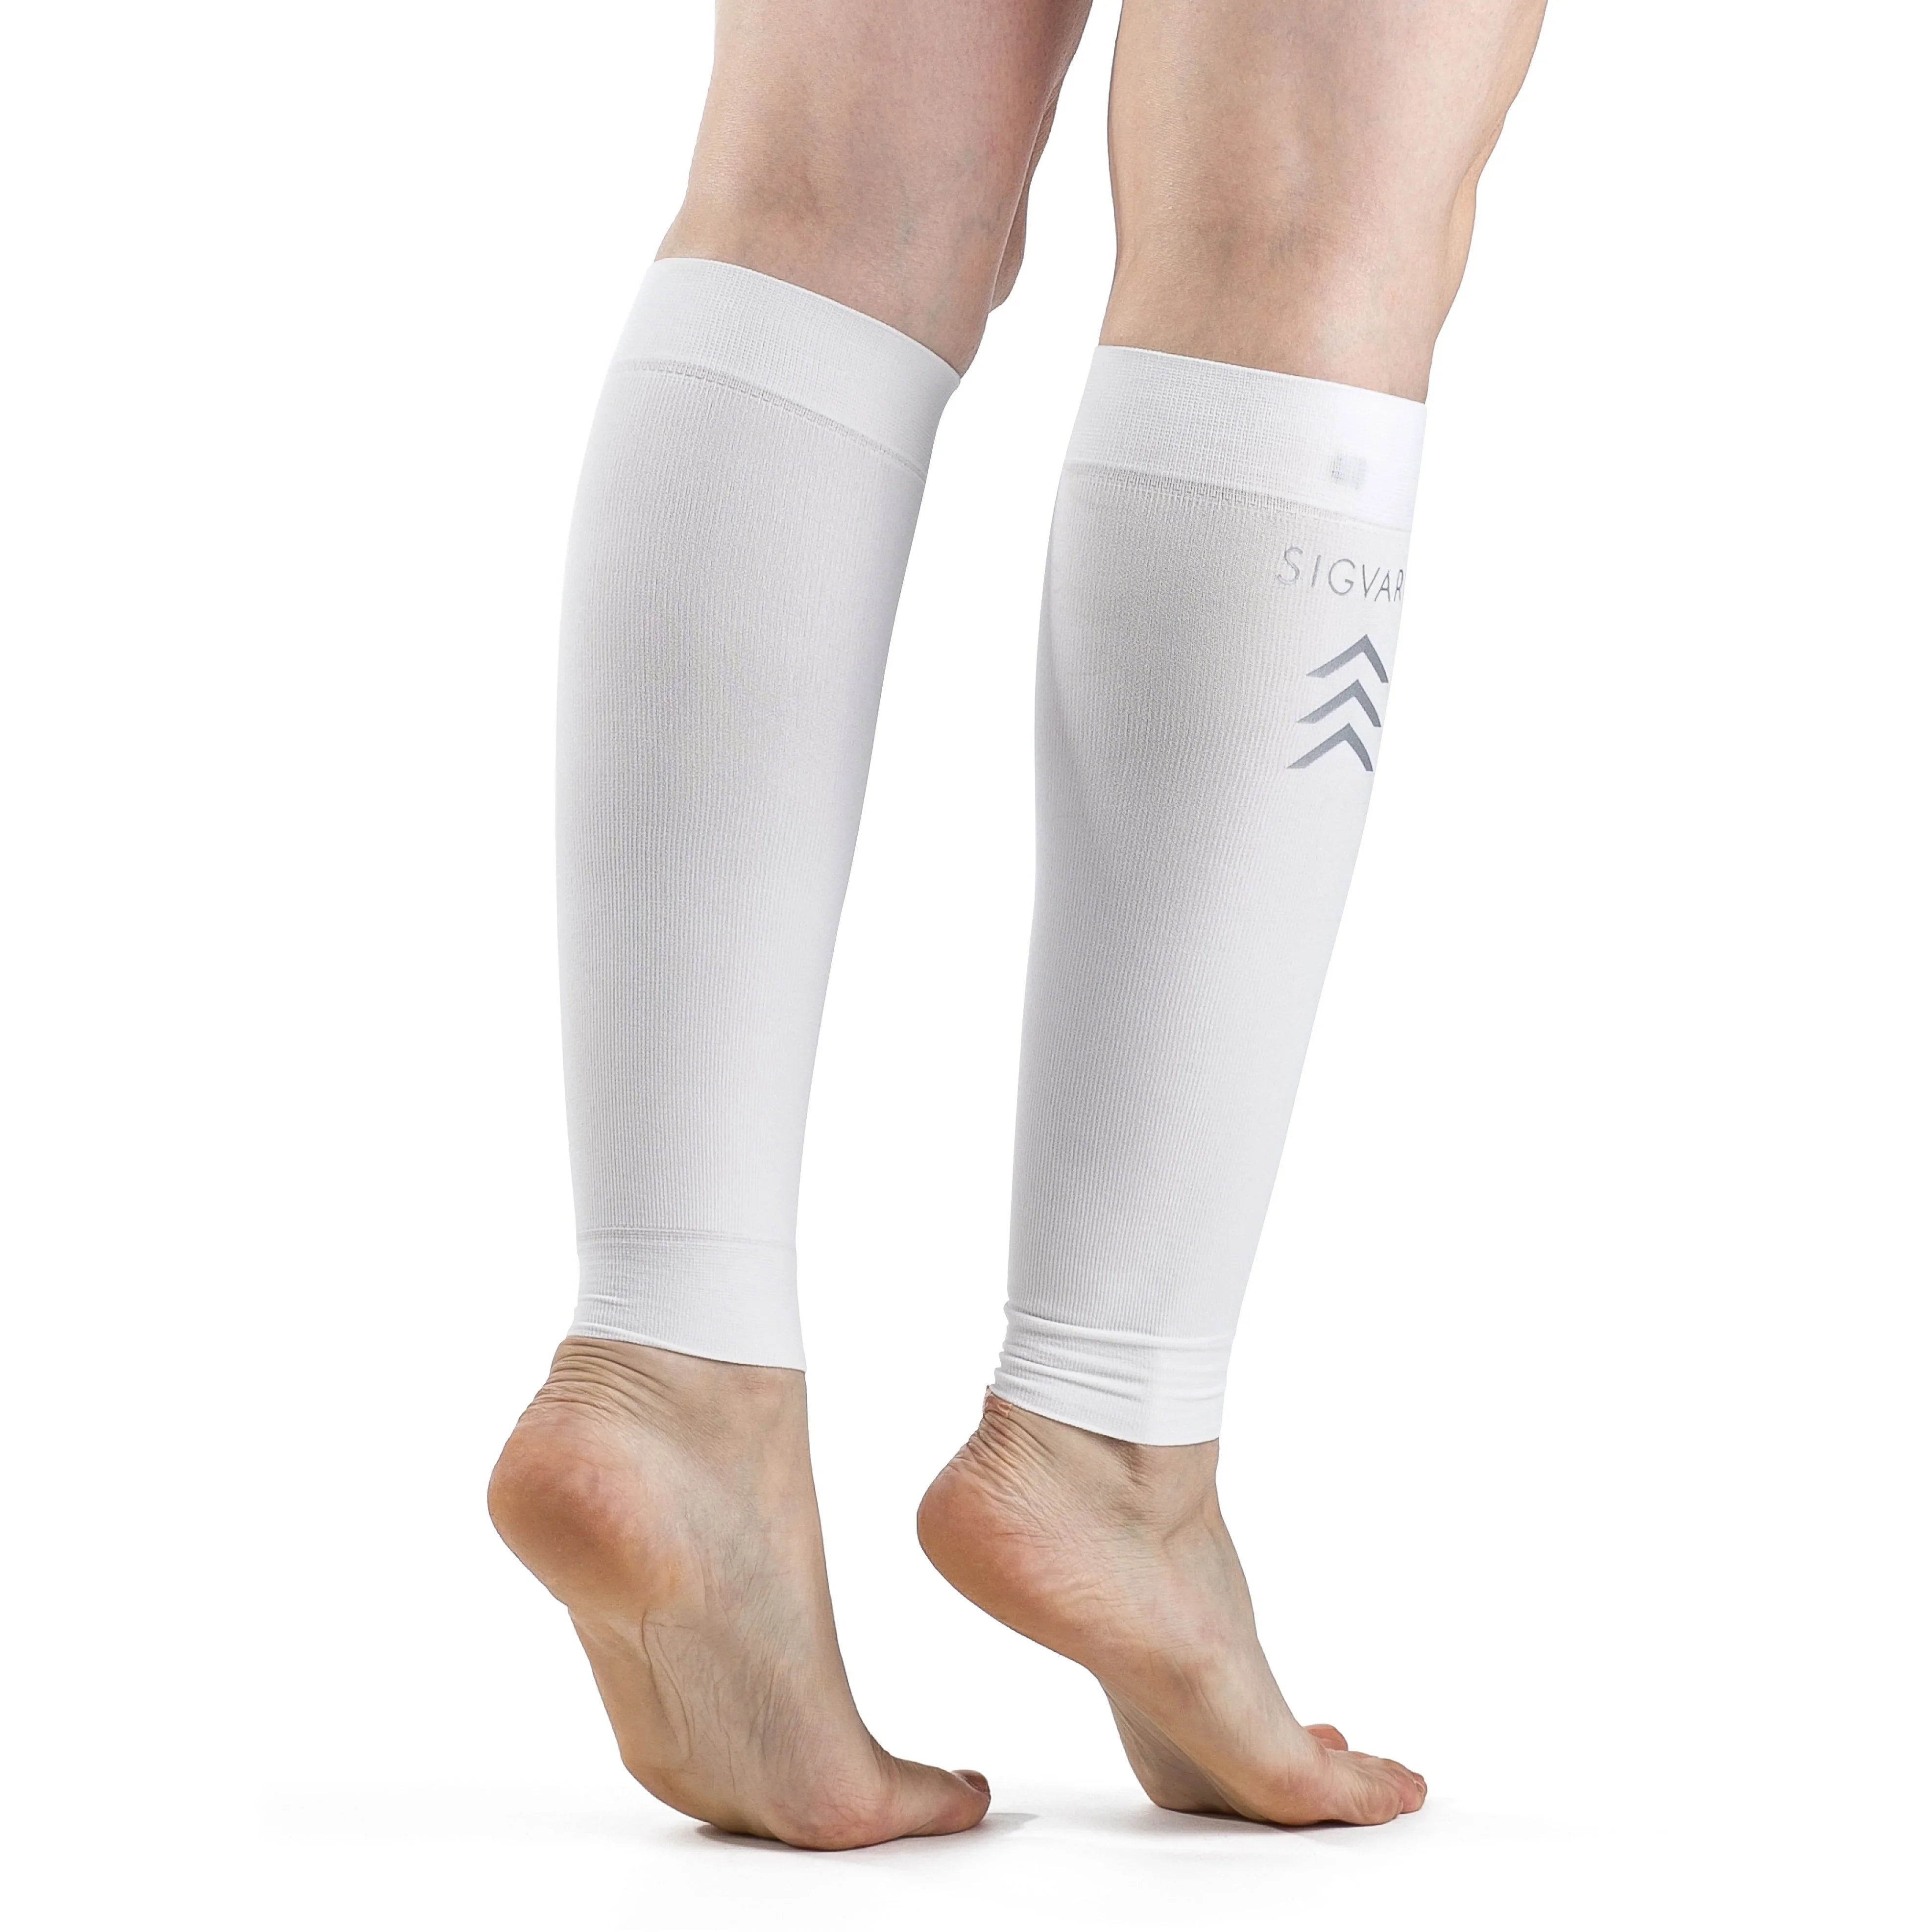 aZengear Calf Support Compression Sleeves (Pair) for Women, Men, Running |  20-30mmHg Class 2 Shin Splints Brace, Footless Leg Socks for Torn Muscle